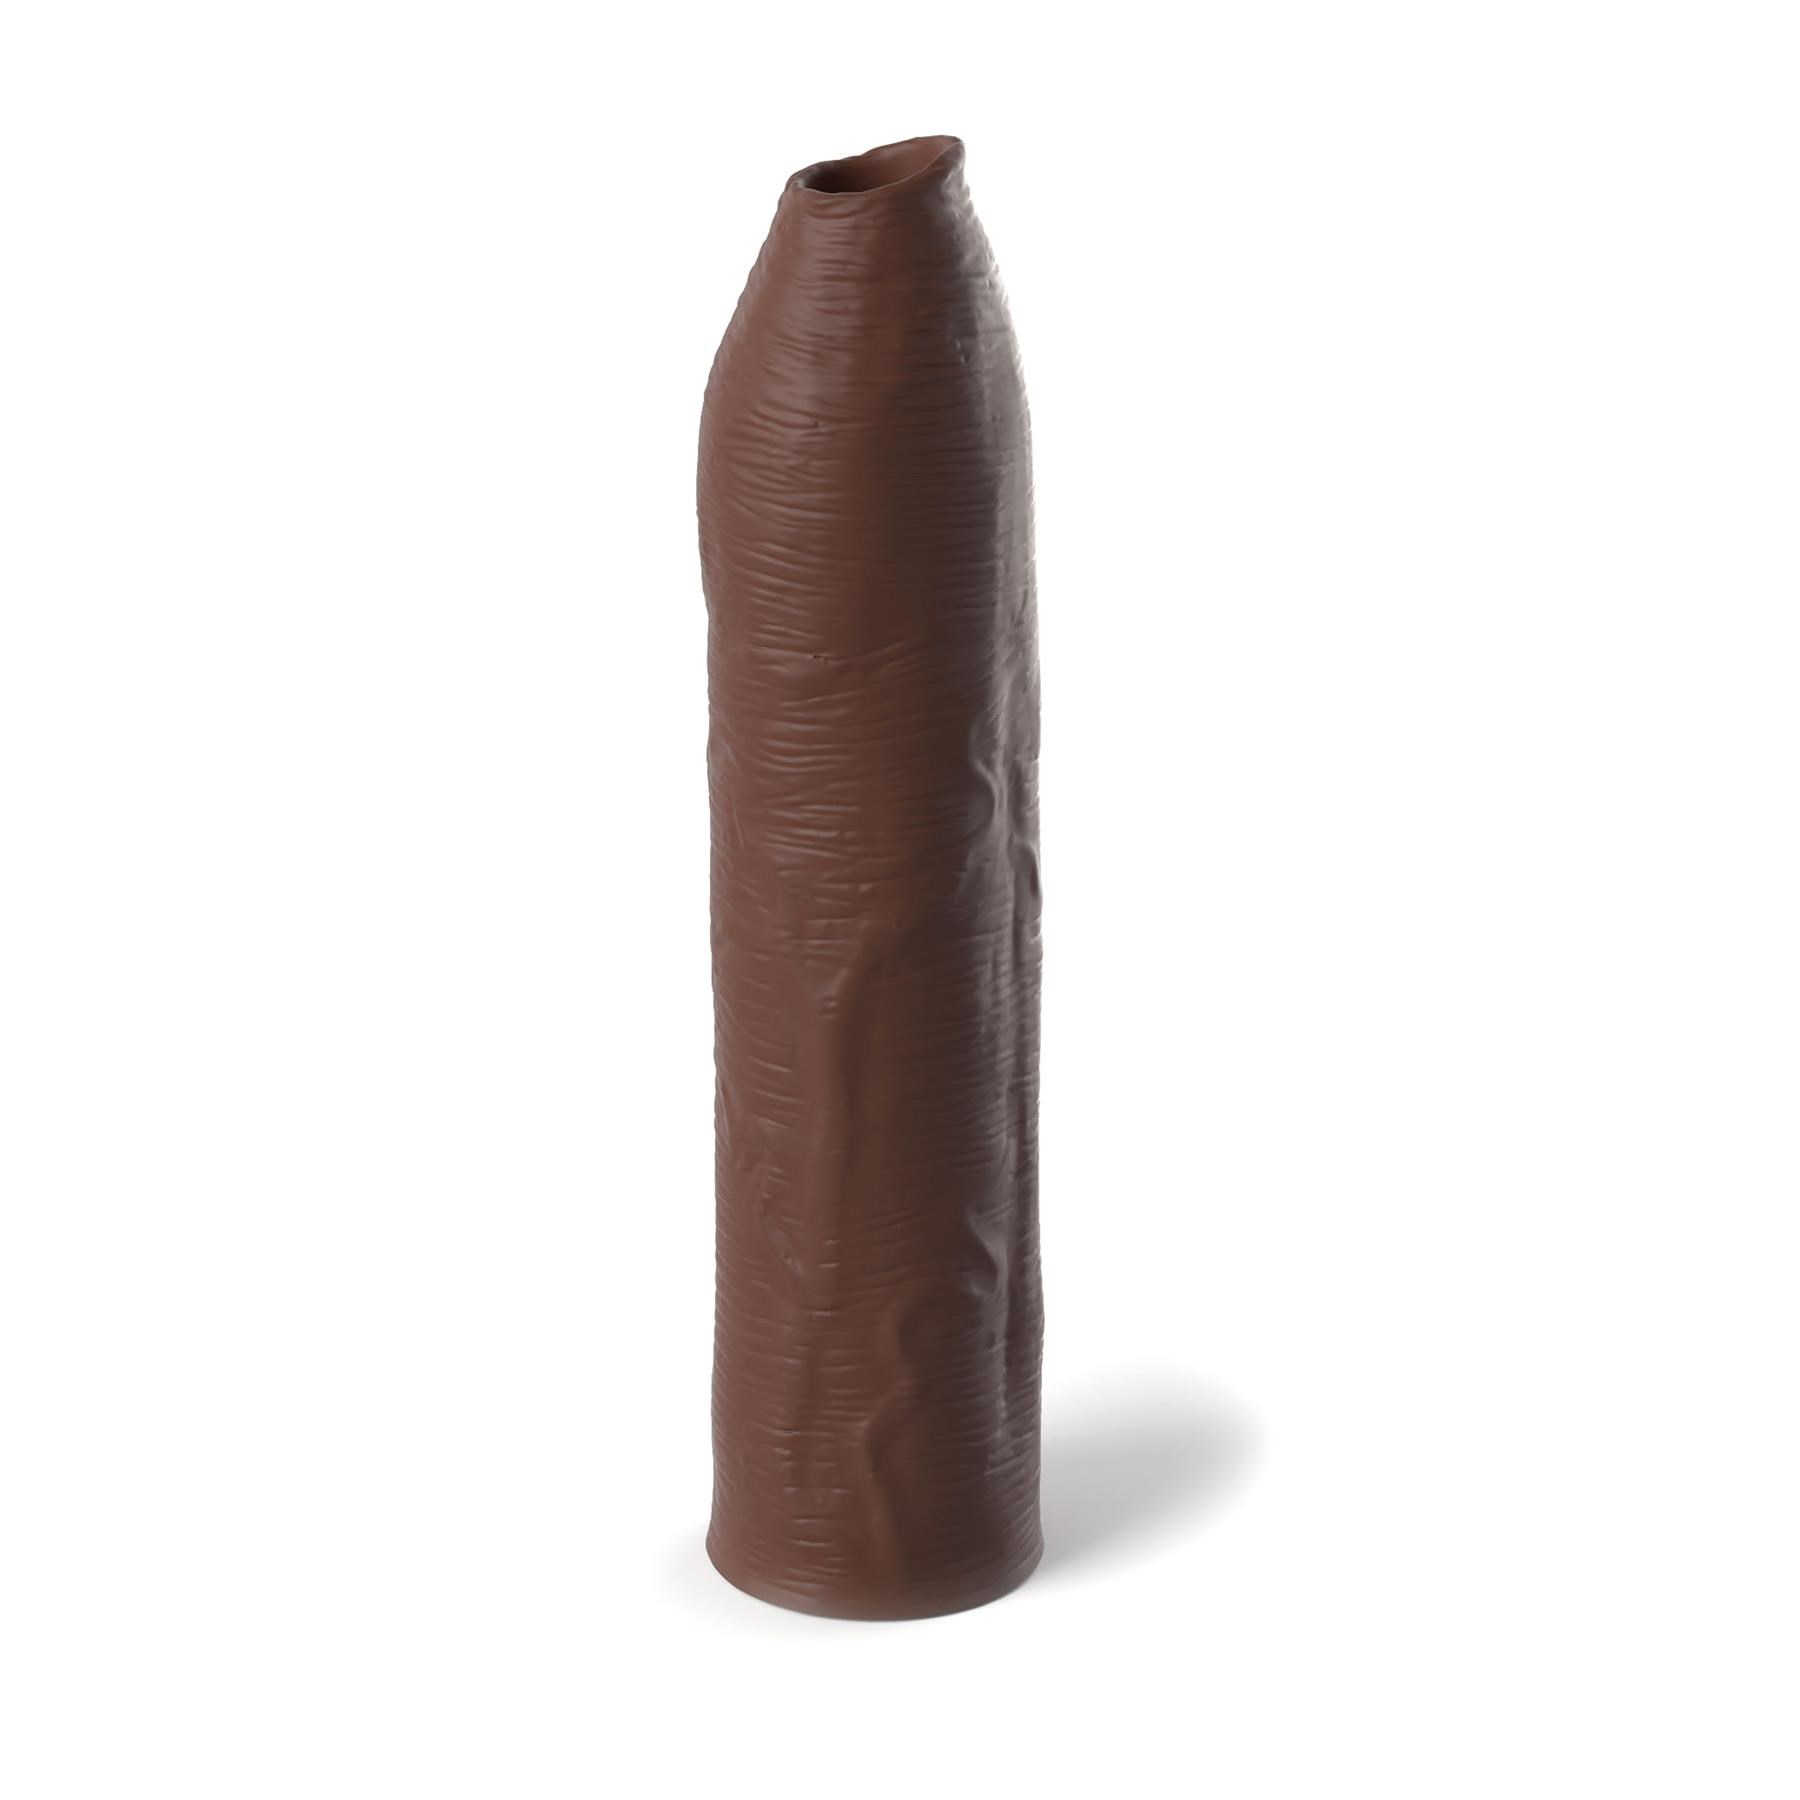 Fantasy X-Tensions Elite Uncut Silicone Penis Enhancer - Product Shot - Brown